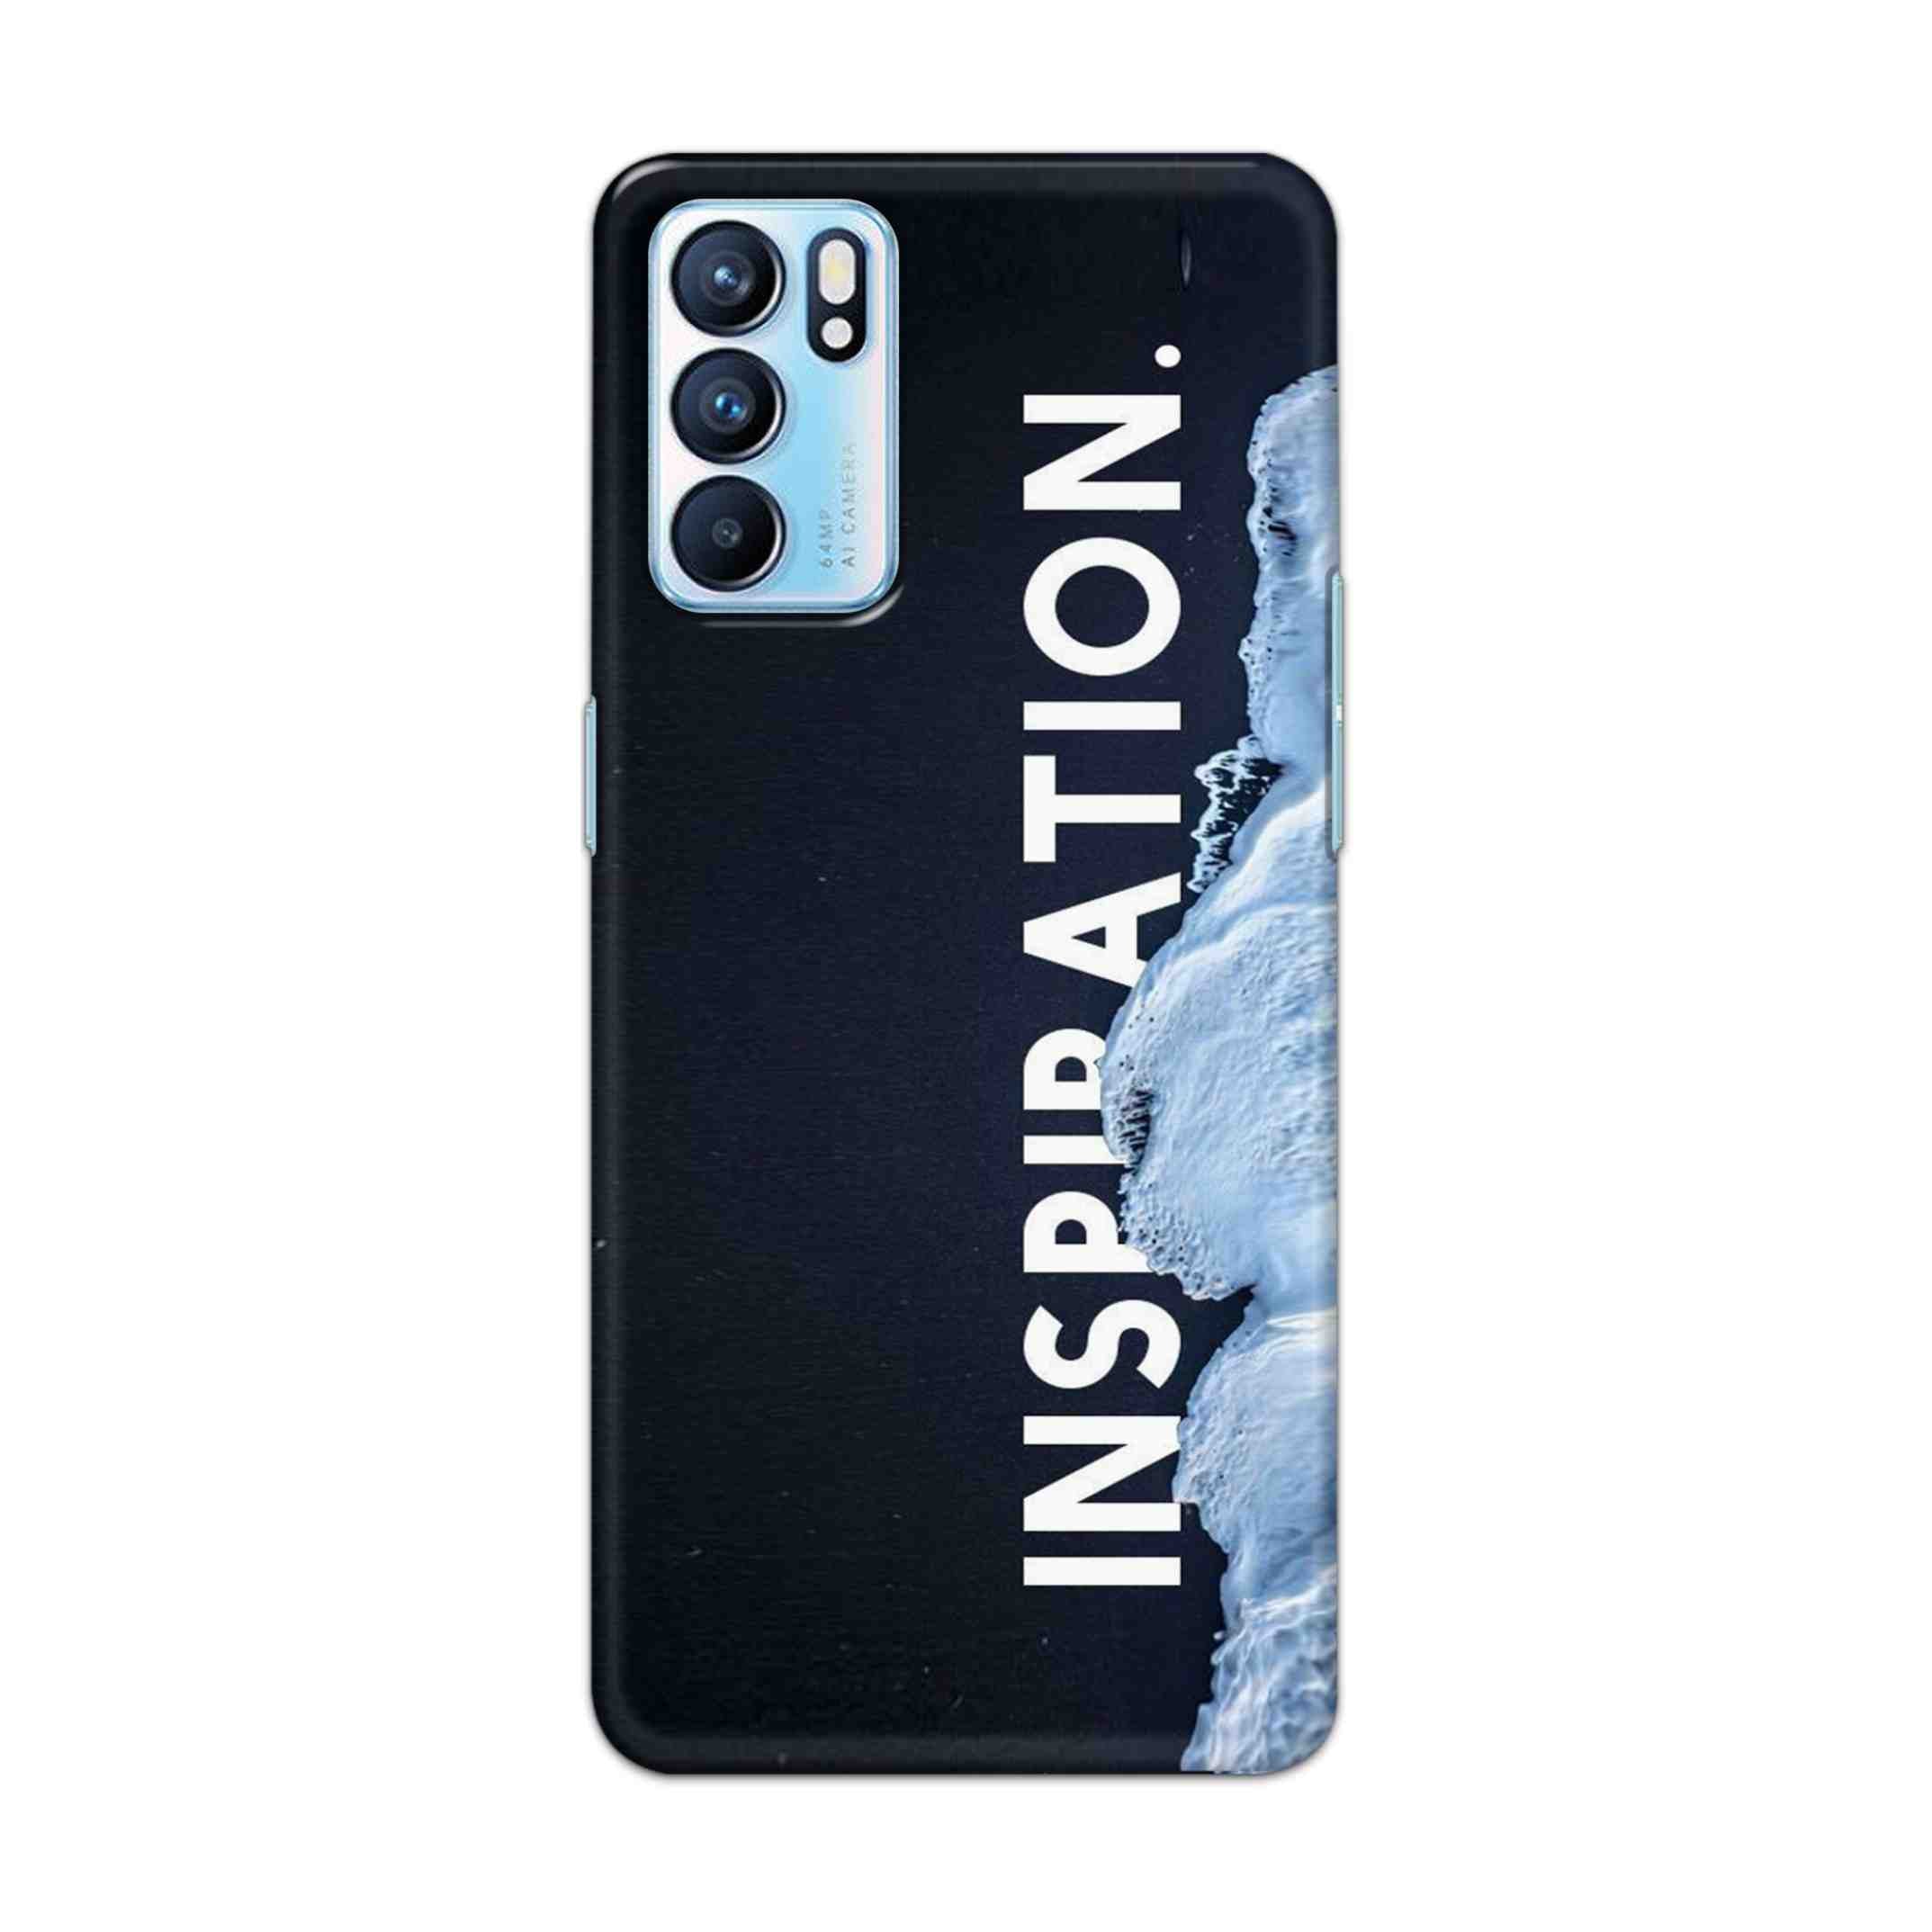 Buy Inspiration Hard Back Mobile Phone Case Cover For OPPO RENO 6 Online